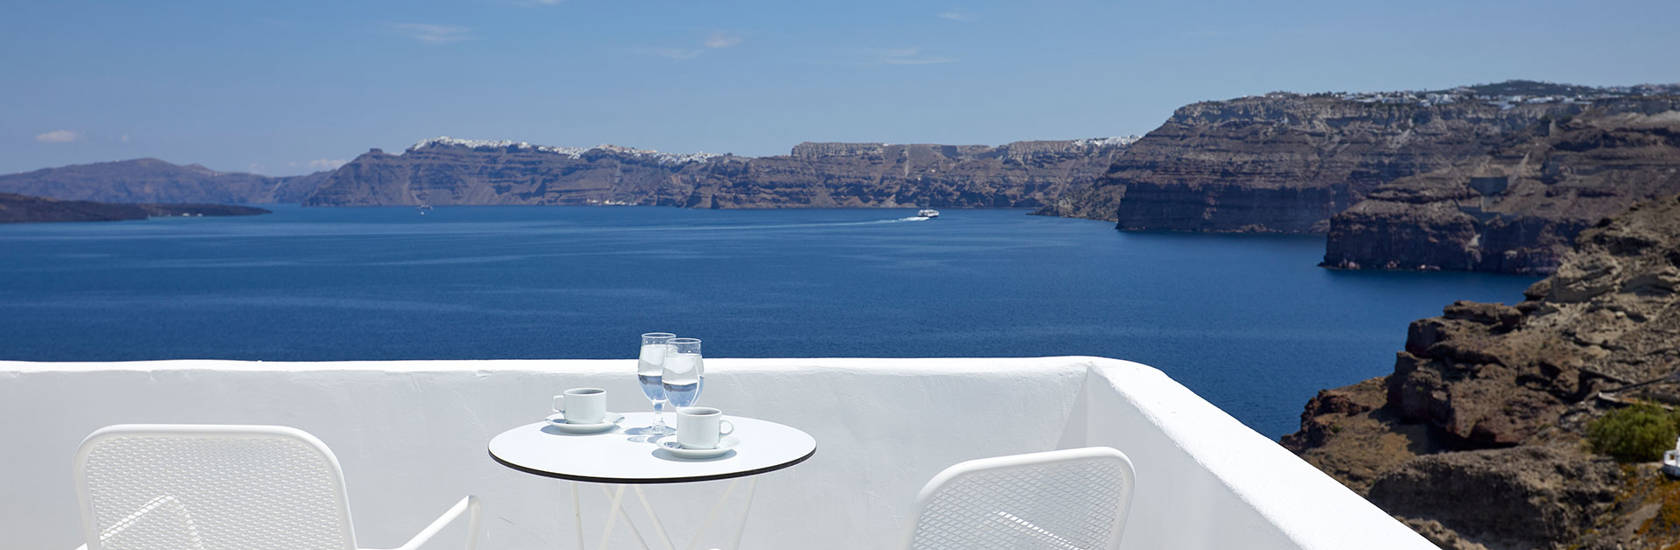 
Santorini View Hotel balcony in white colors, white table seats and caldera view